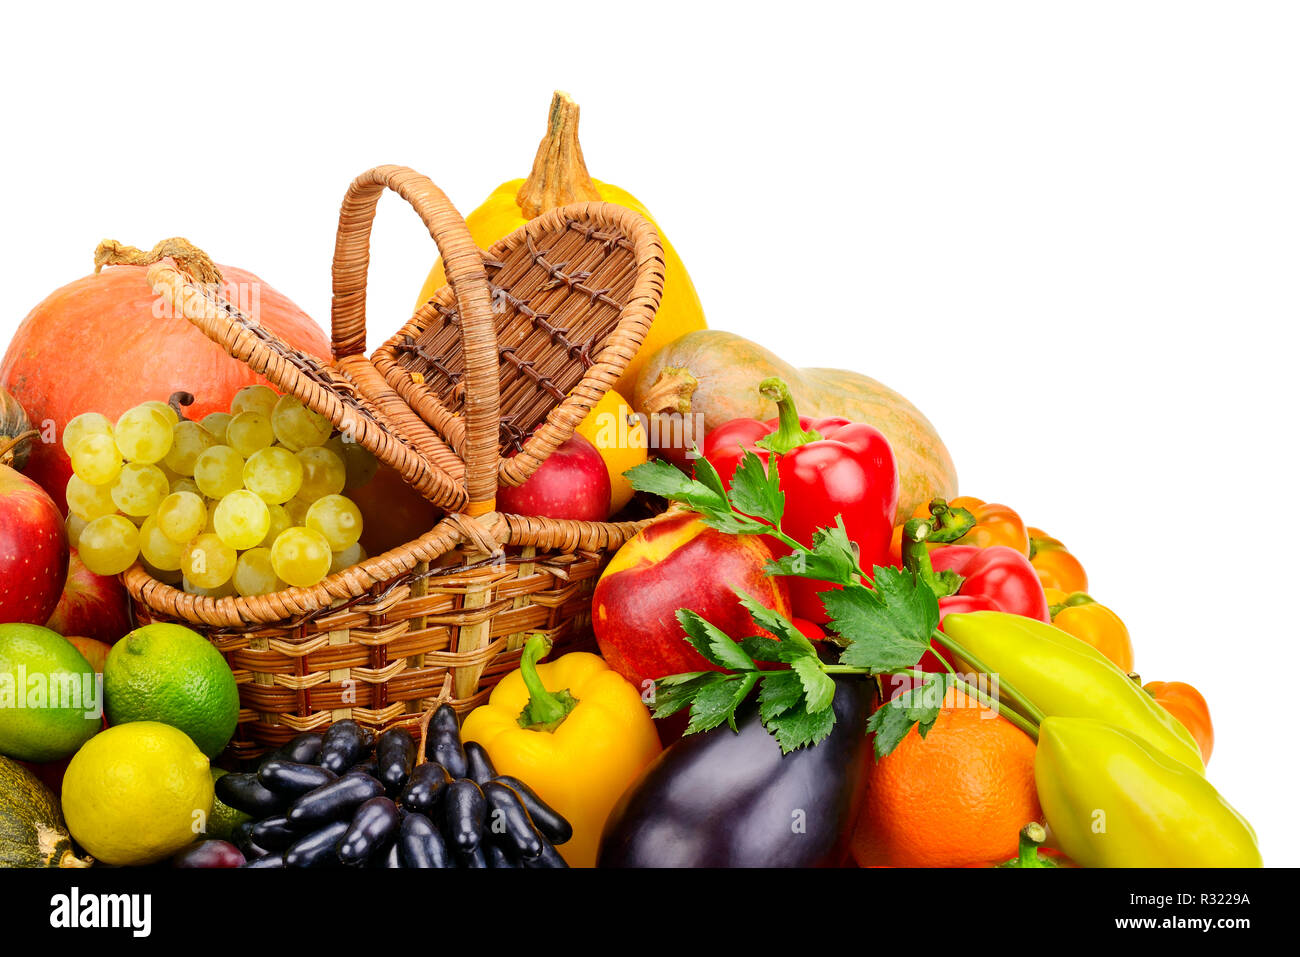 Diferentes verduras frescas como fondo, vista superior Fotografía de stock  - Alamy